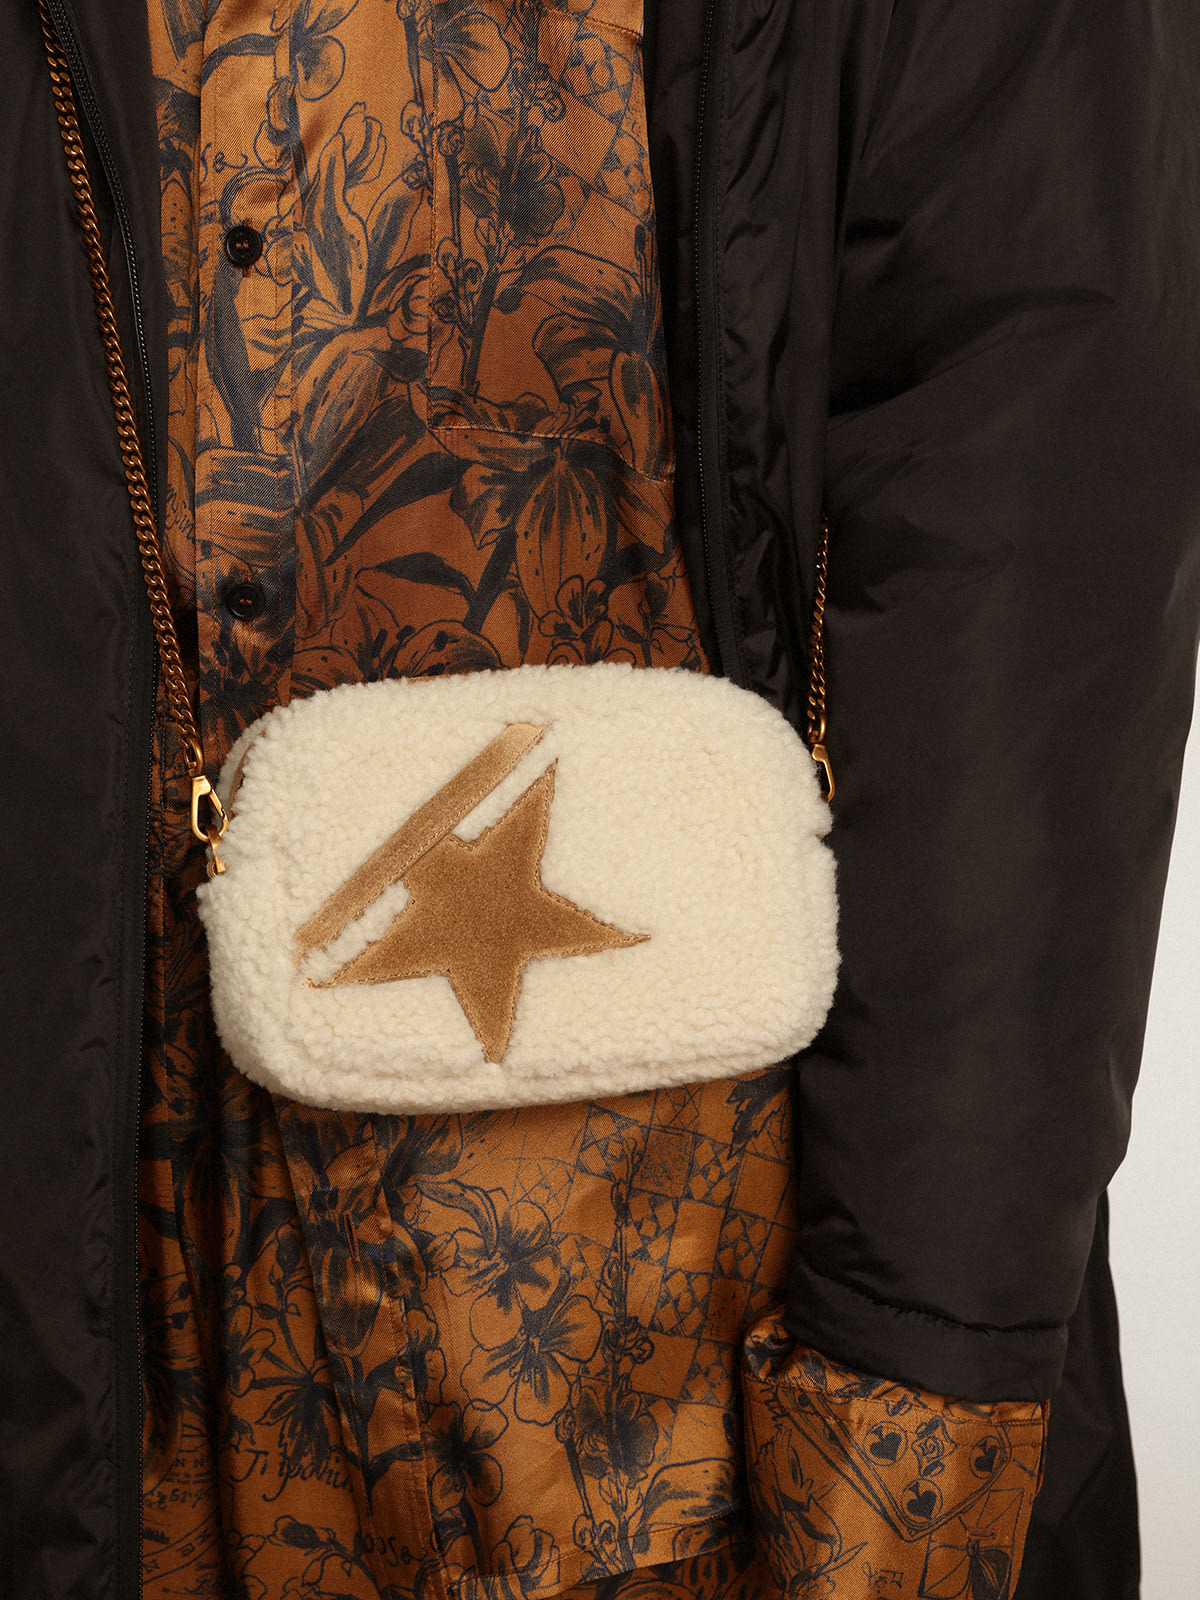 Golden Goose - Bolso Mini Star Bag en shearling color beige con estrella de ante in 